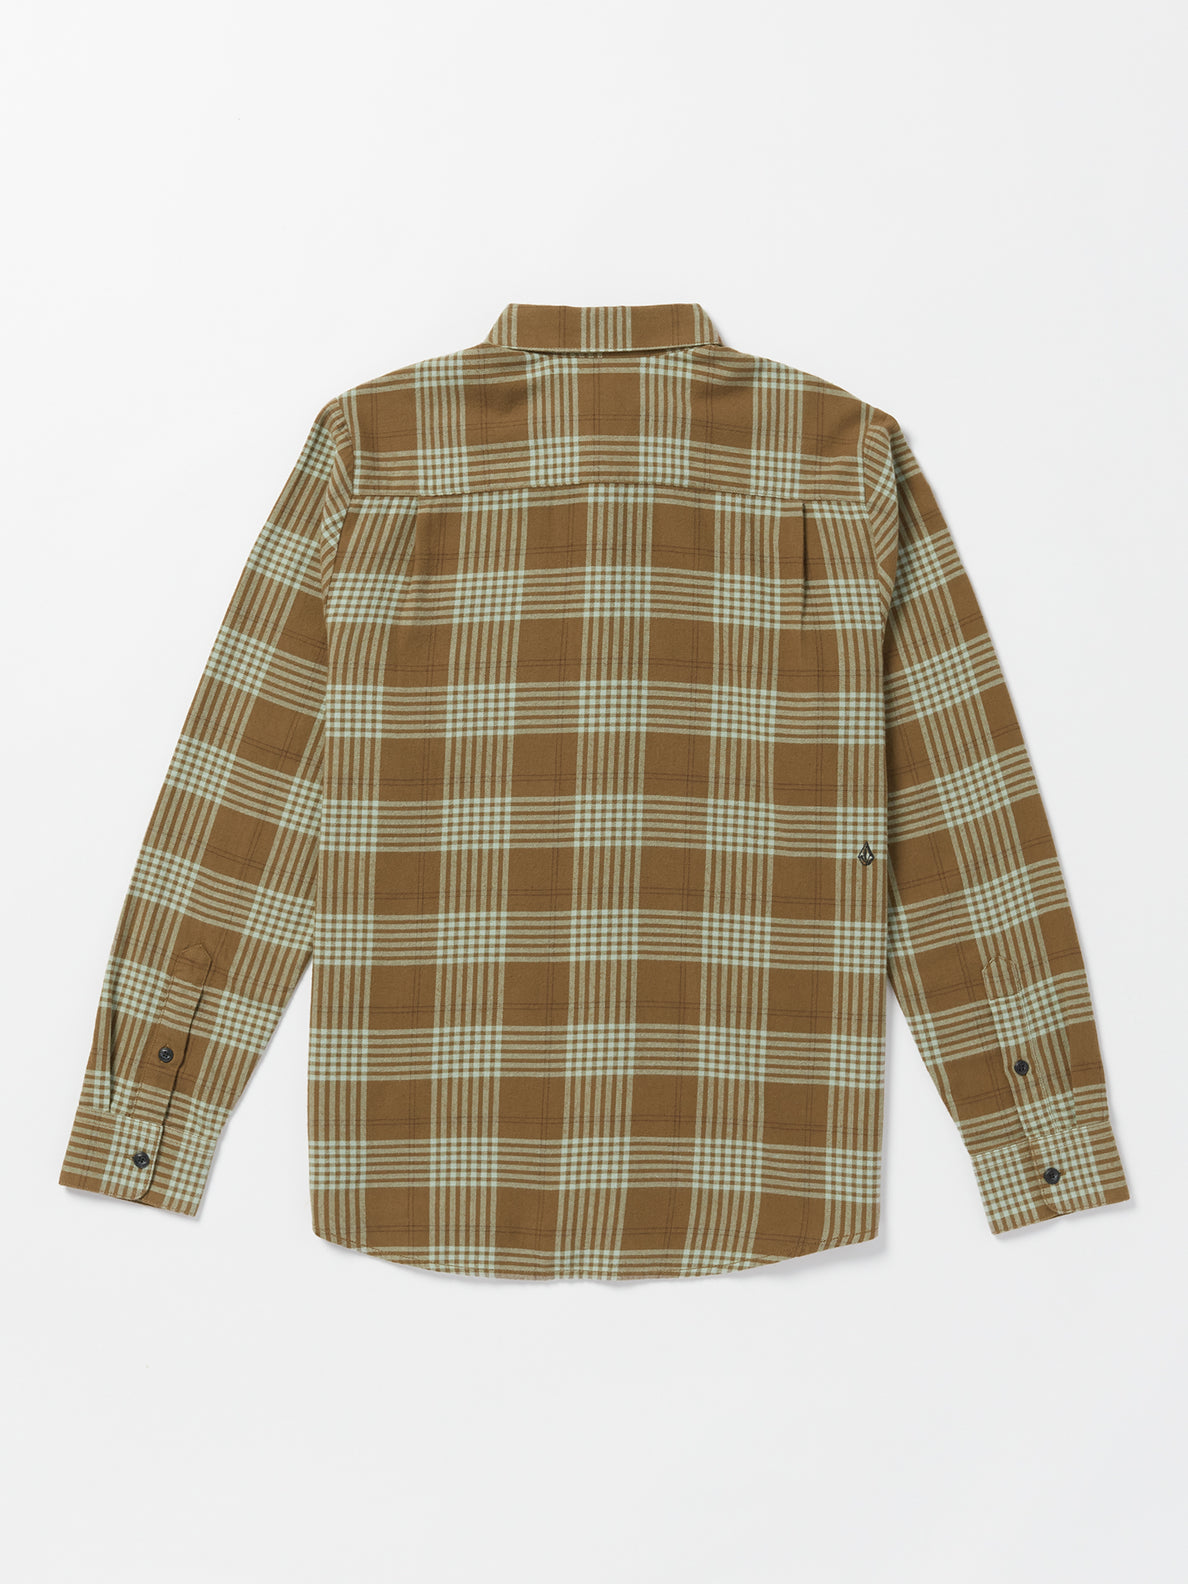 Caden Plaid Long Sleeve Shirt - Mud (A0532303_MUD) [B]